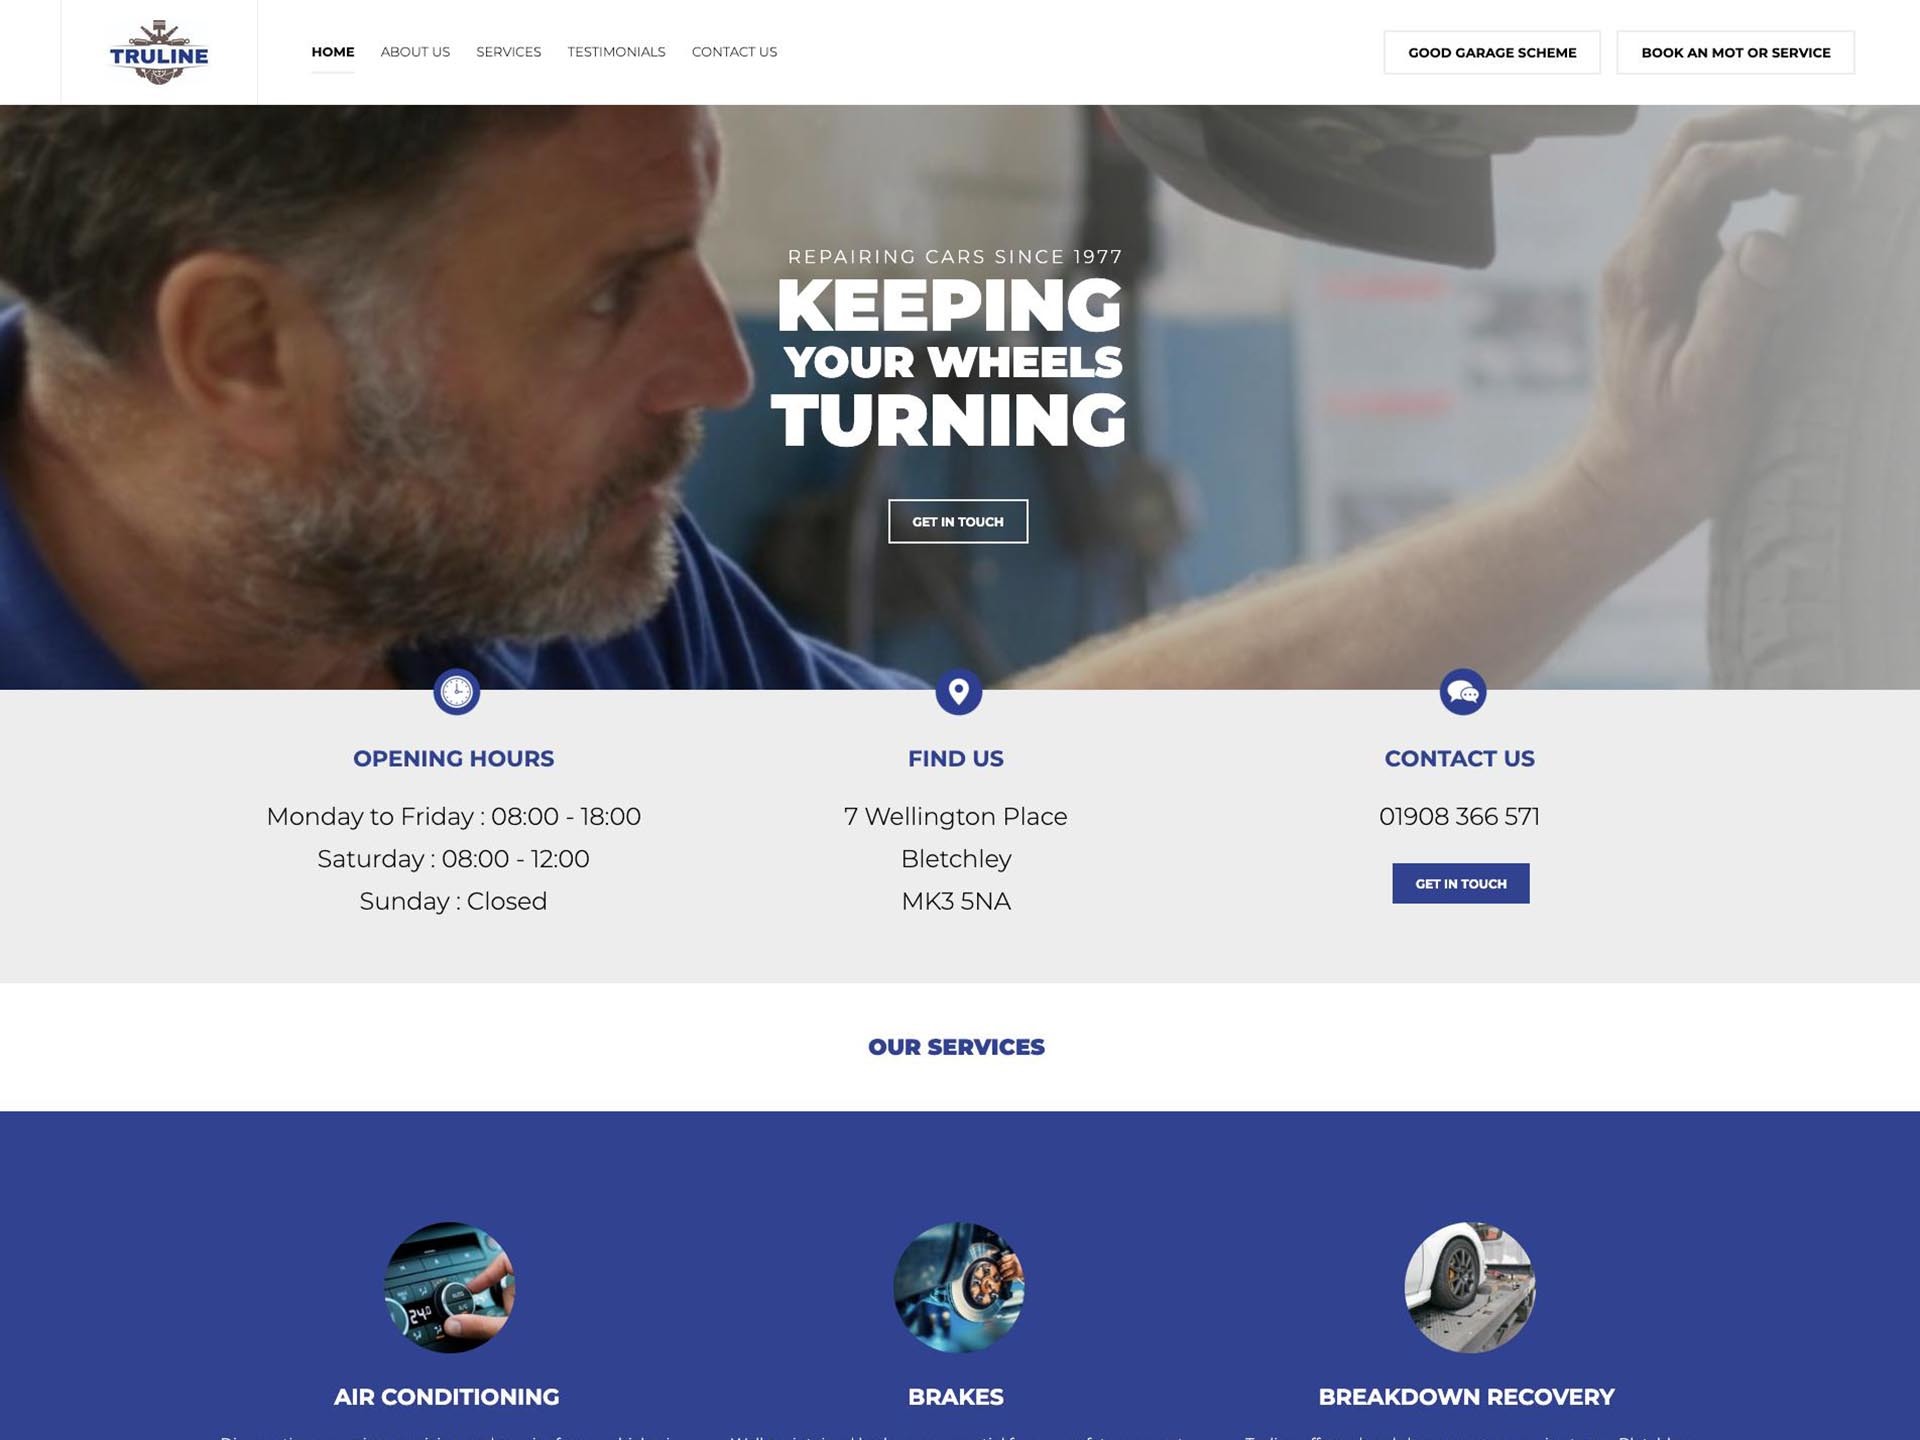 A car repair company's website design